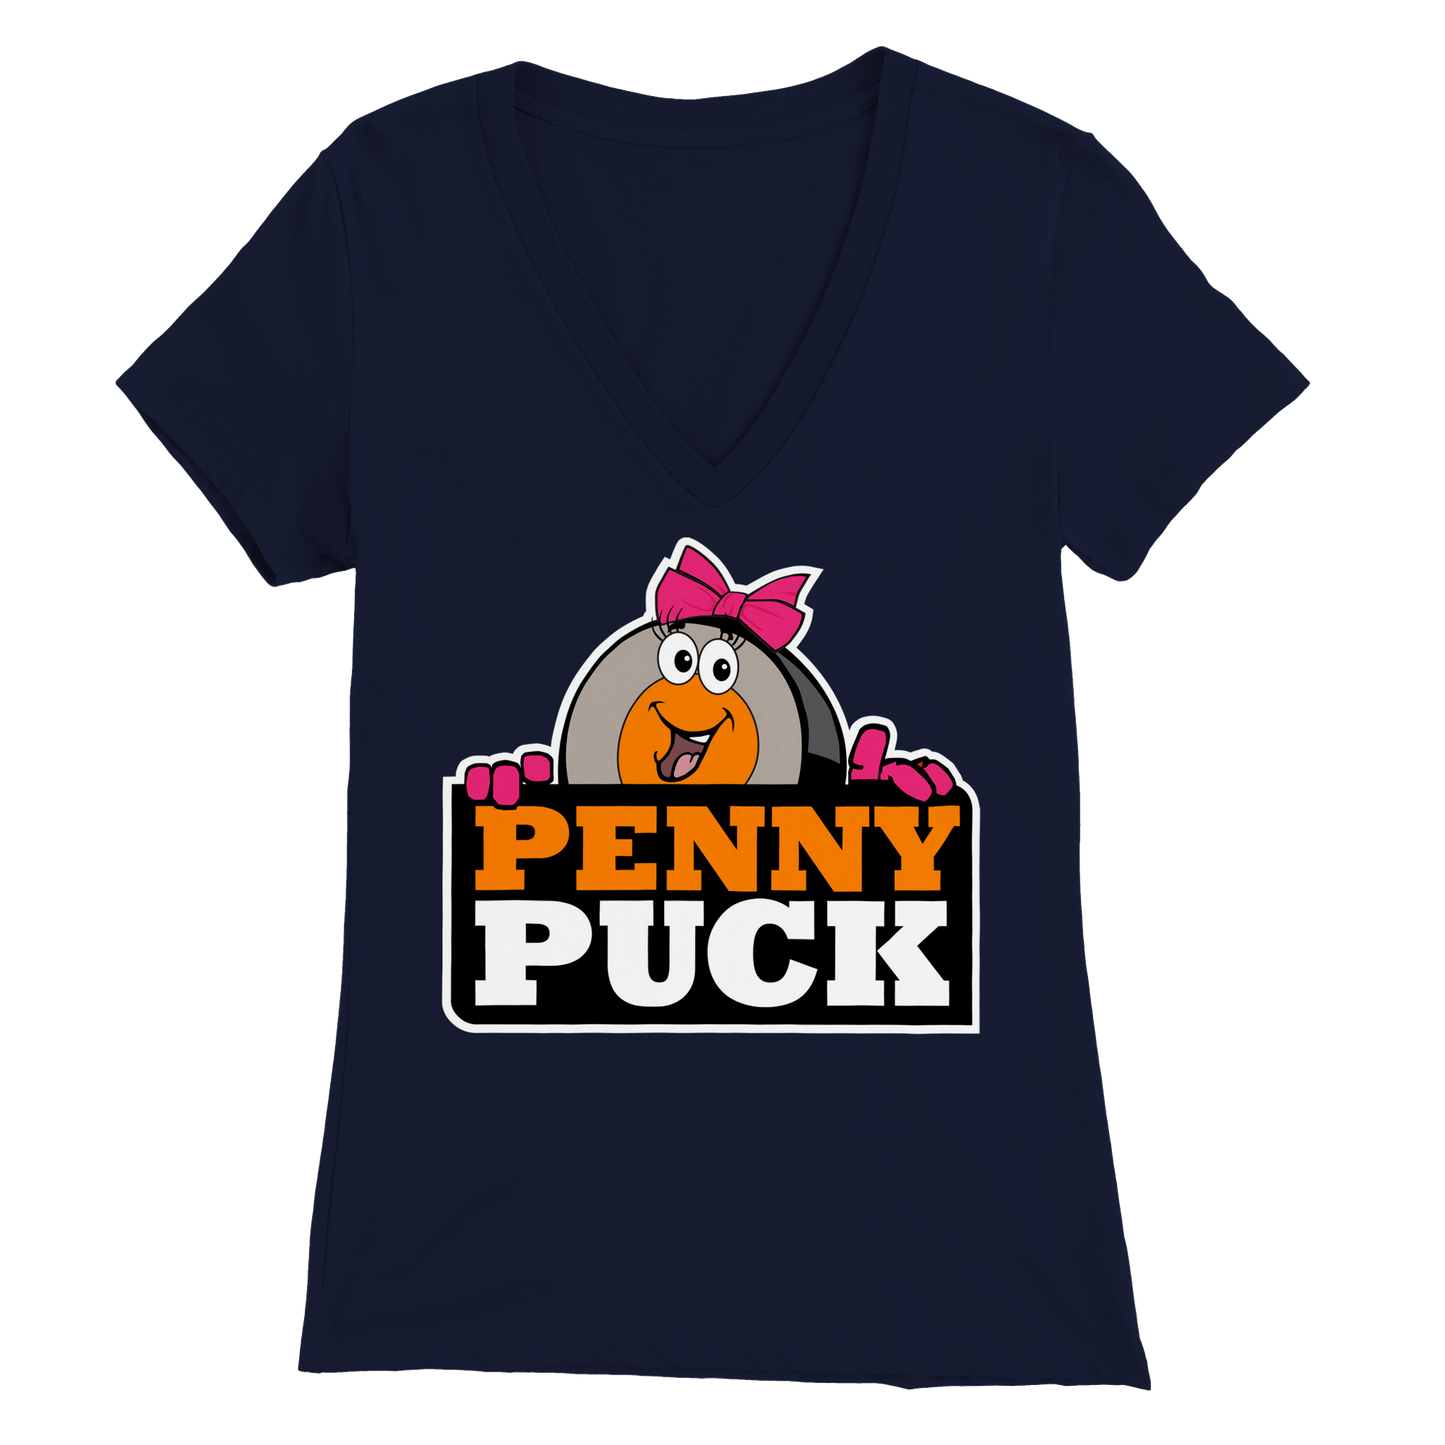 Penny Puck Peek Premium Womens V-Neck T-shirt